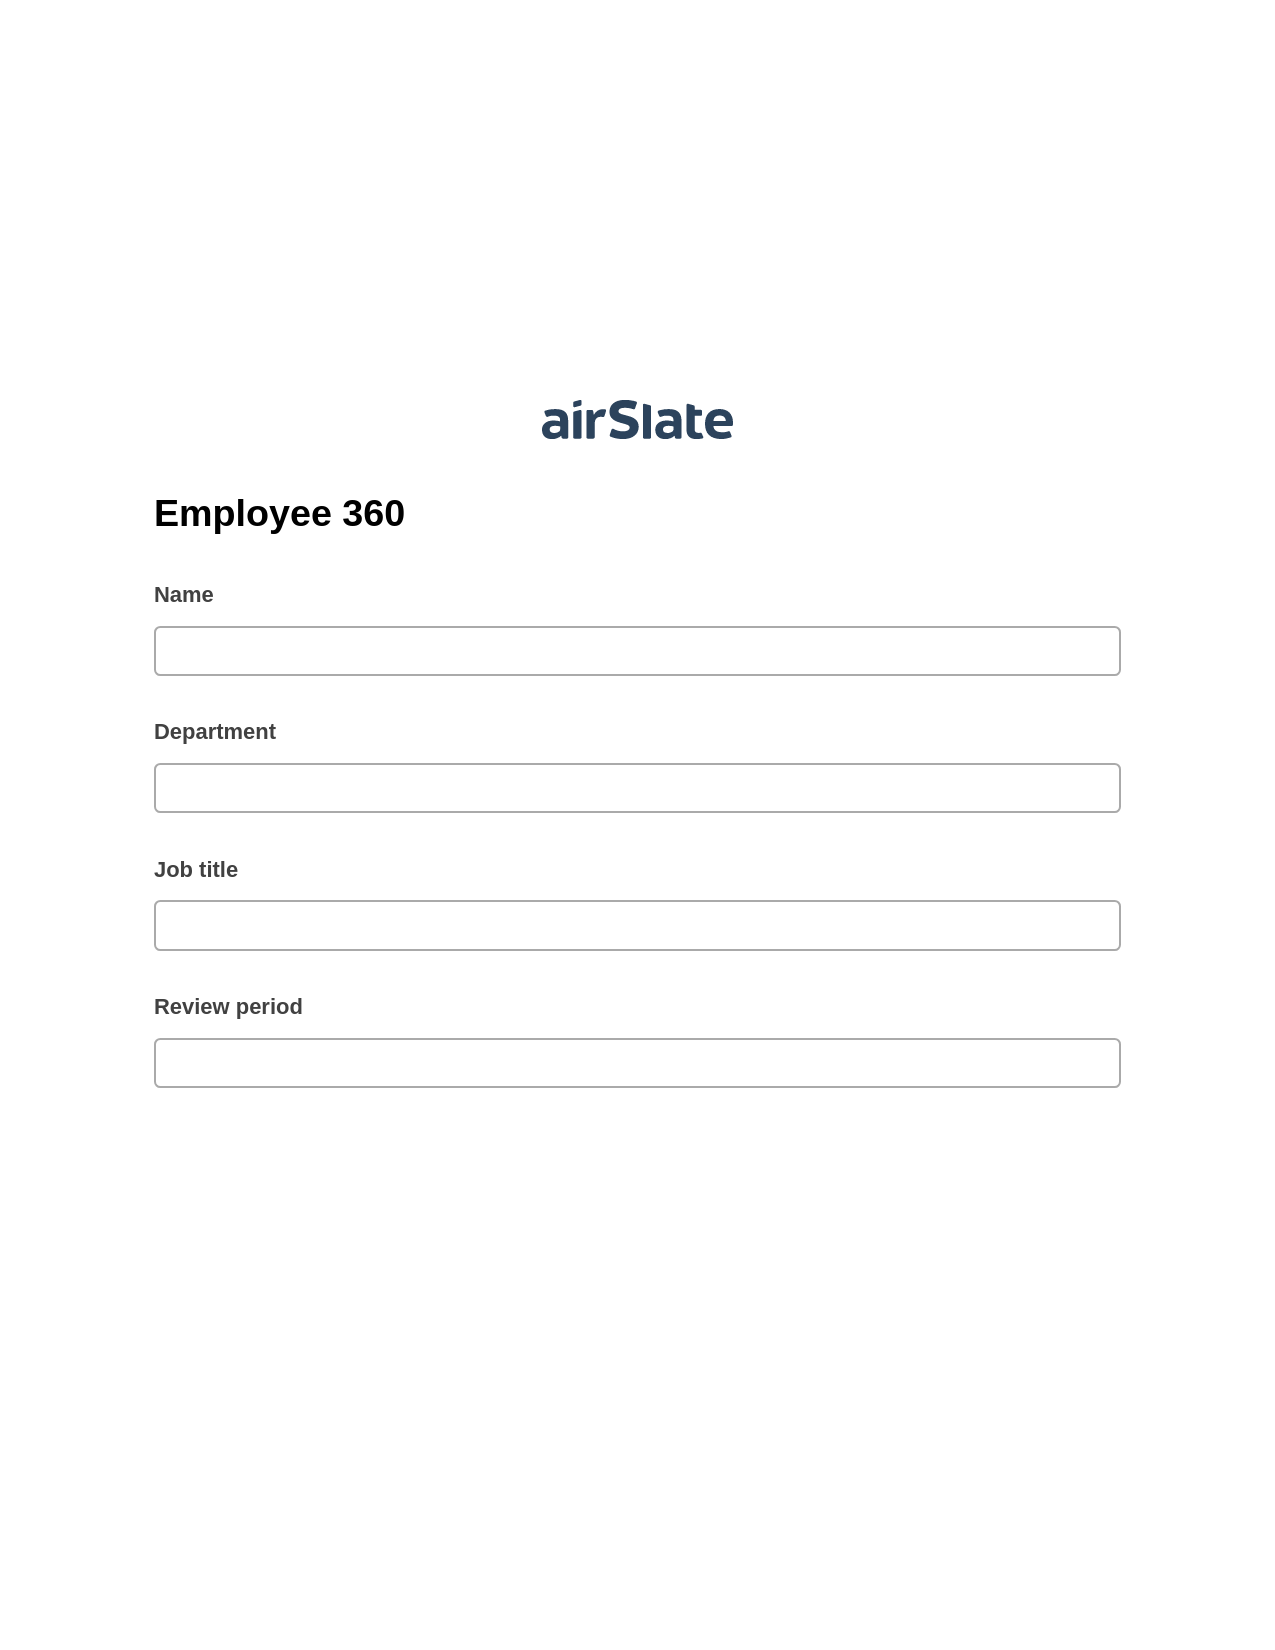 Multirole Employee 360 Pre-fill from Salesforce Records Bot, Google Cloud Print Bot, Webhook Postfinish Bot